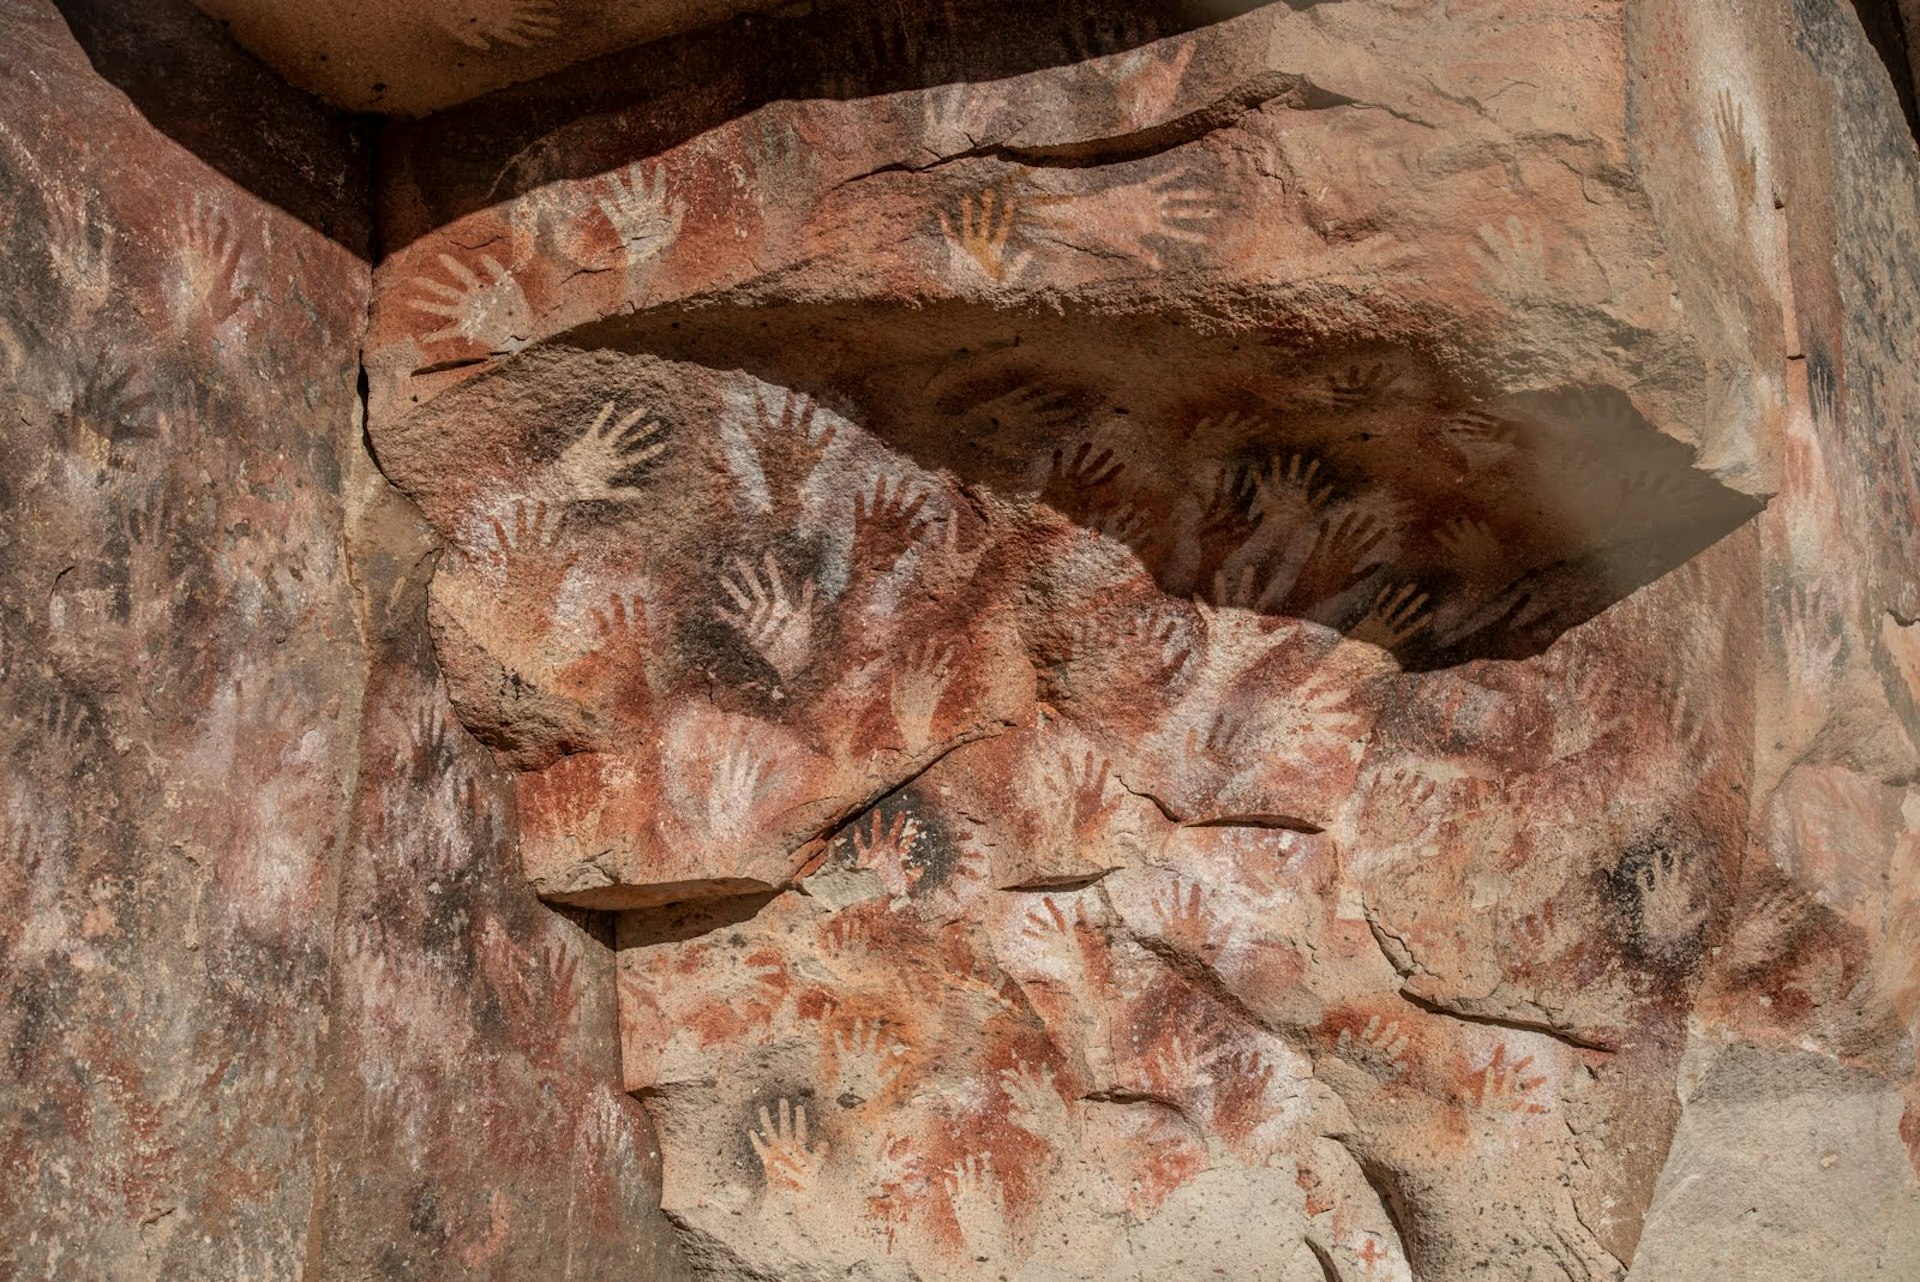 Ancient handprints in reddish tones decorate the walls of Cueva de las Manos in Argentina's Patagonia National Park